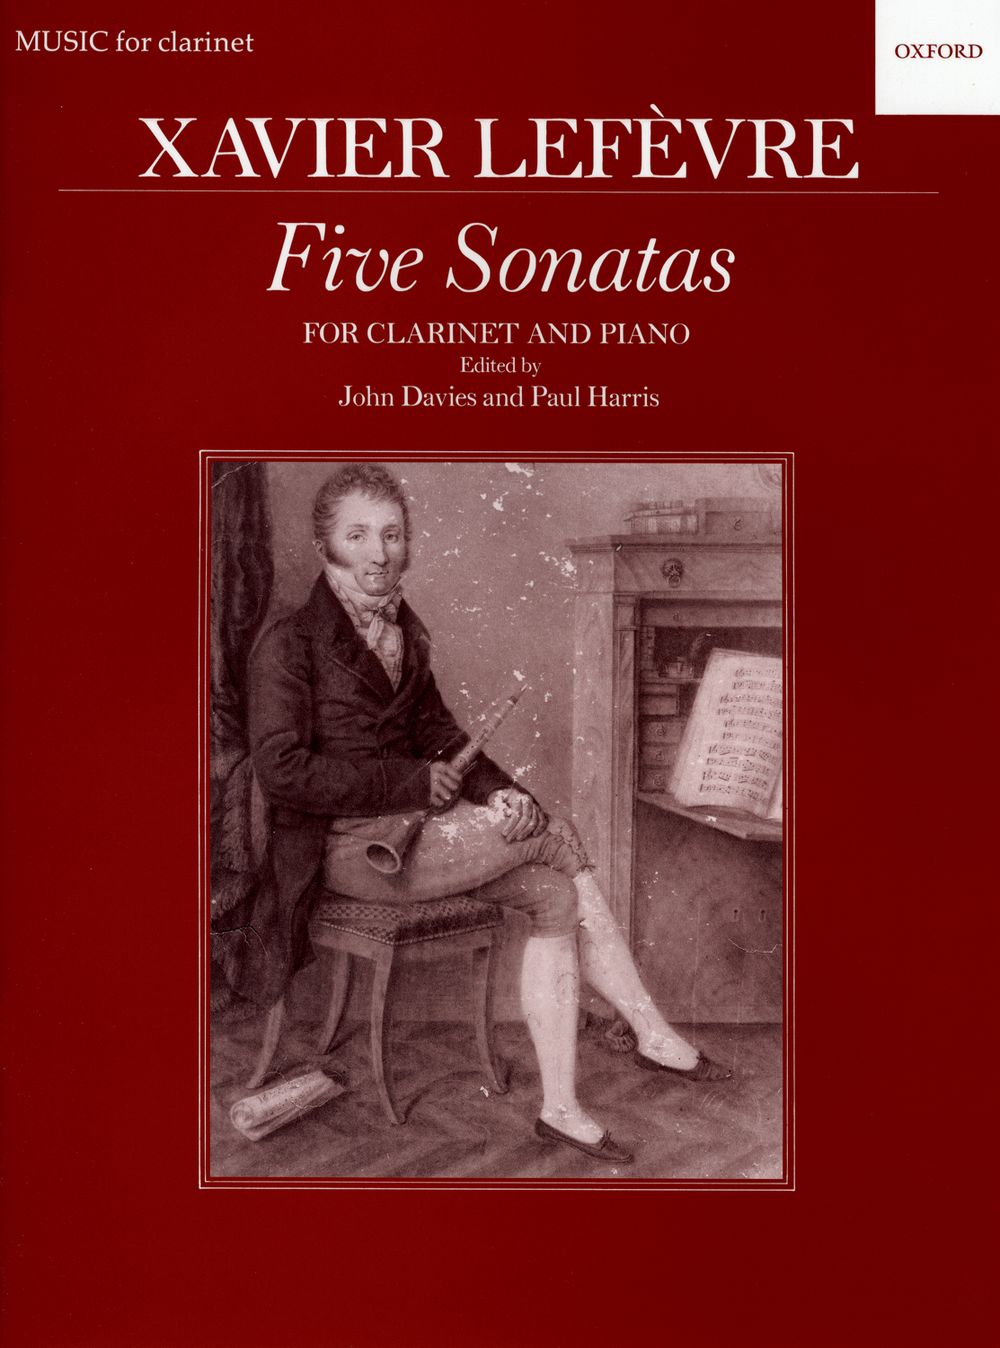 Lefevre Sonatas (5) Ed Davies & Harris Clarinet Sheet Music Songbook